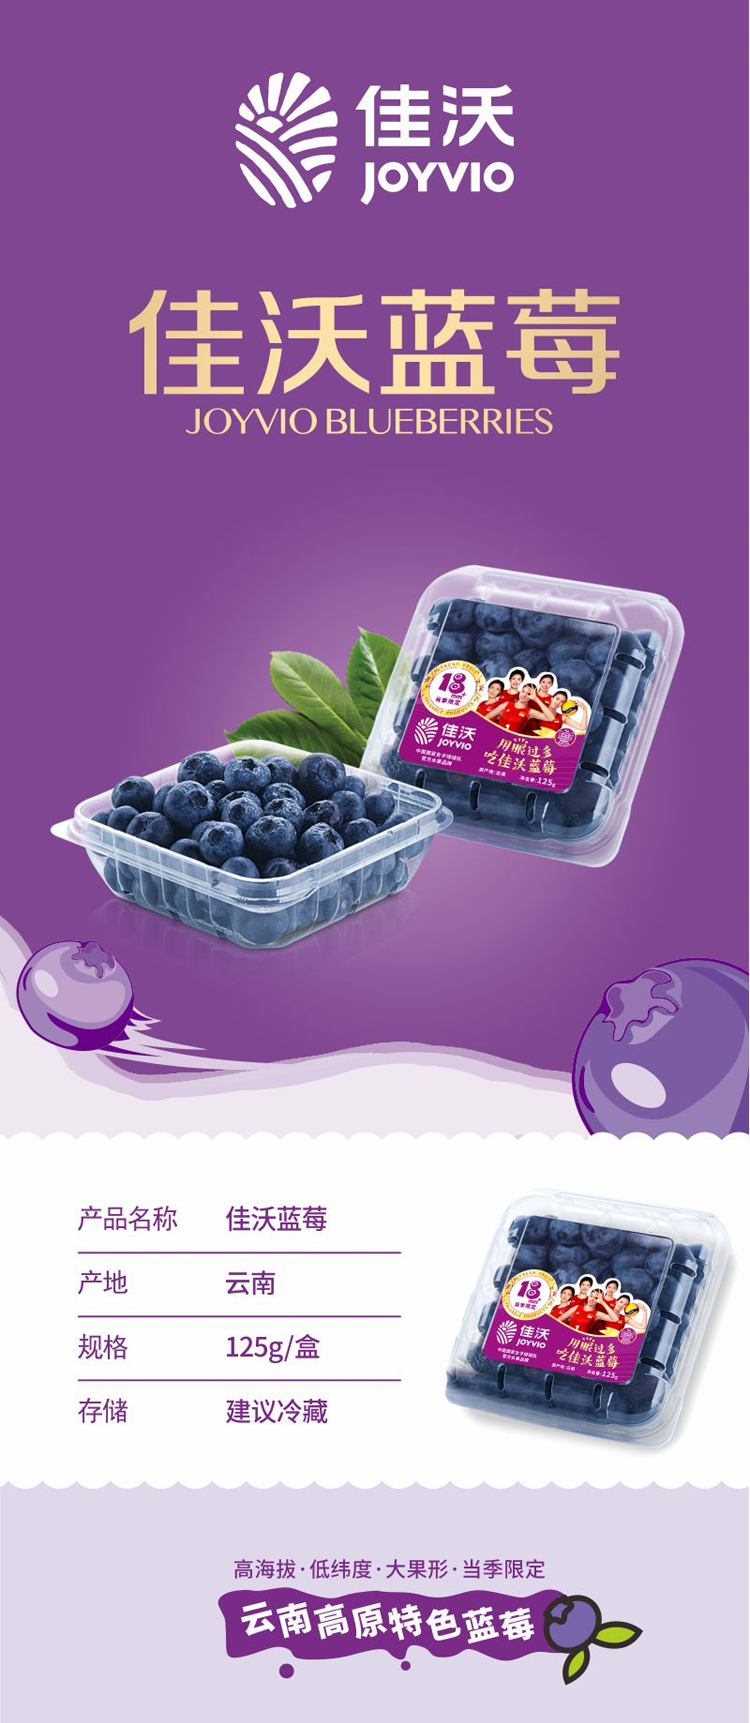 joyvio佳沃 当季云南精选蓝莓超大果18mm+ 4盒礼盒装 约125g/盒 生鲜 新鲜水果